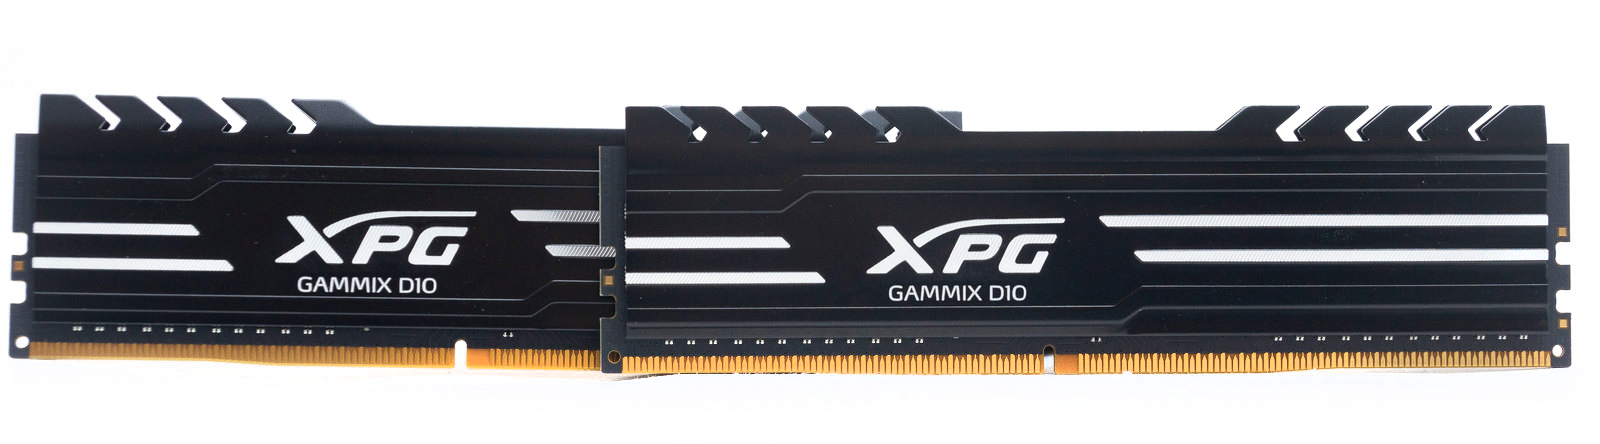 Adata xpg lancer blade 32. Оперативная память a-data XPG GAMMIX d10. XPG GAMMIX d10. XPG GAMMIX d10 32 ГБ (16 ГБ X 2 шт.) Ddr4 3200 МГЦ DIMM cl16 ax4u320016g16a-db10. Оперативная память XPG GAMMIX d10 2x8 GB набор.